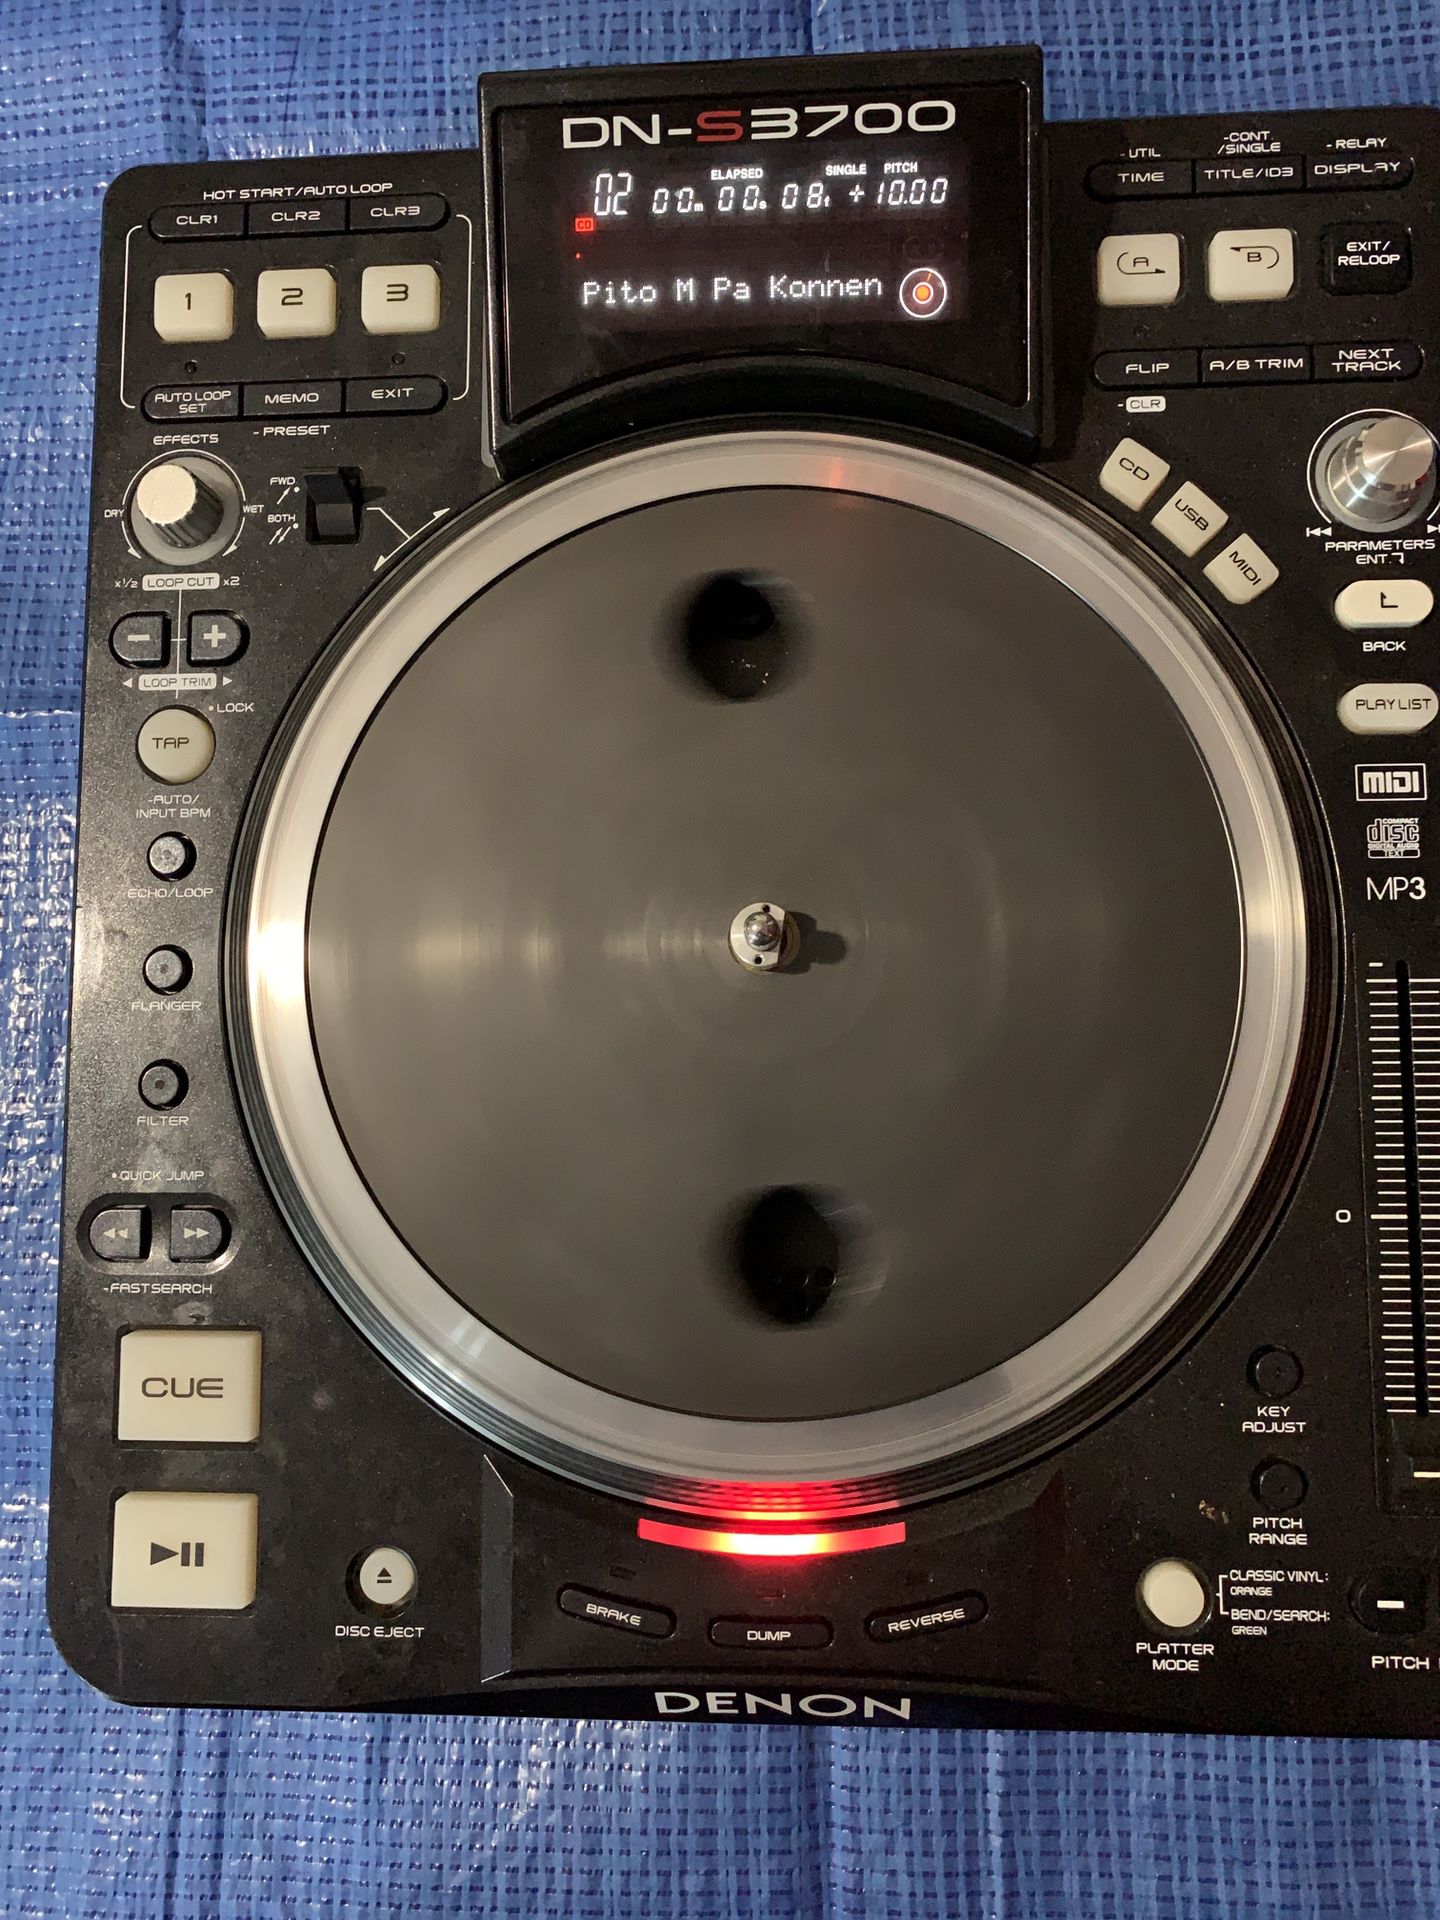 Denon DN-3700 CD DJ Player for Parts or Repair